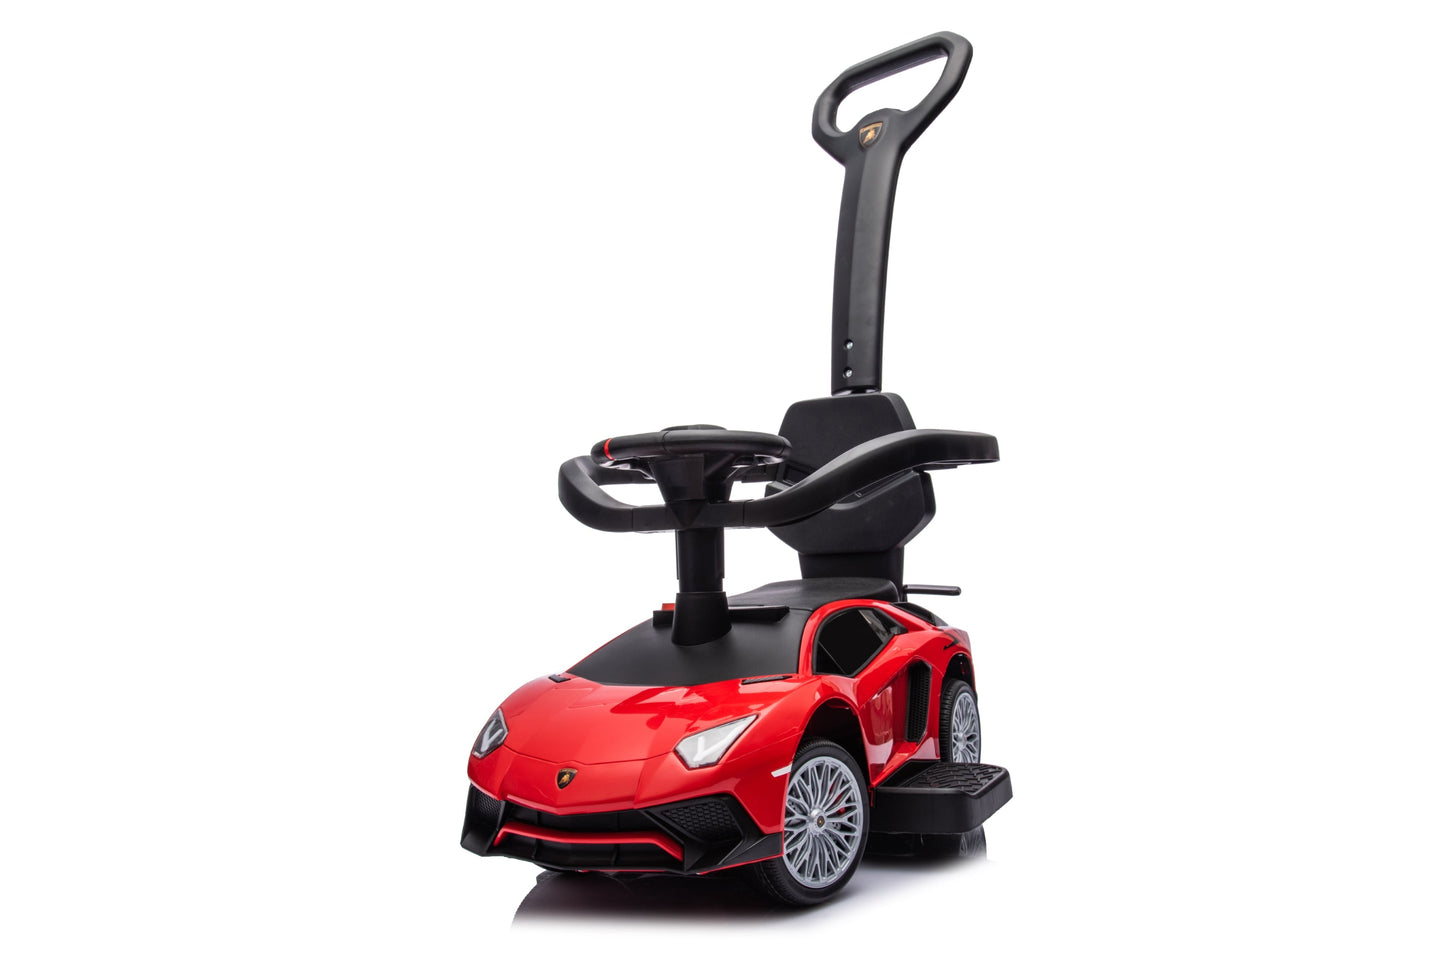 Lamborghini 3-in-1 Kids Push Ride On Toy Car